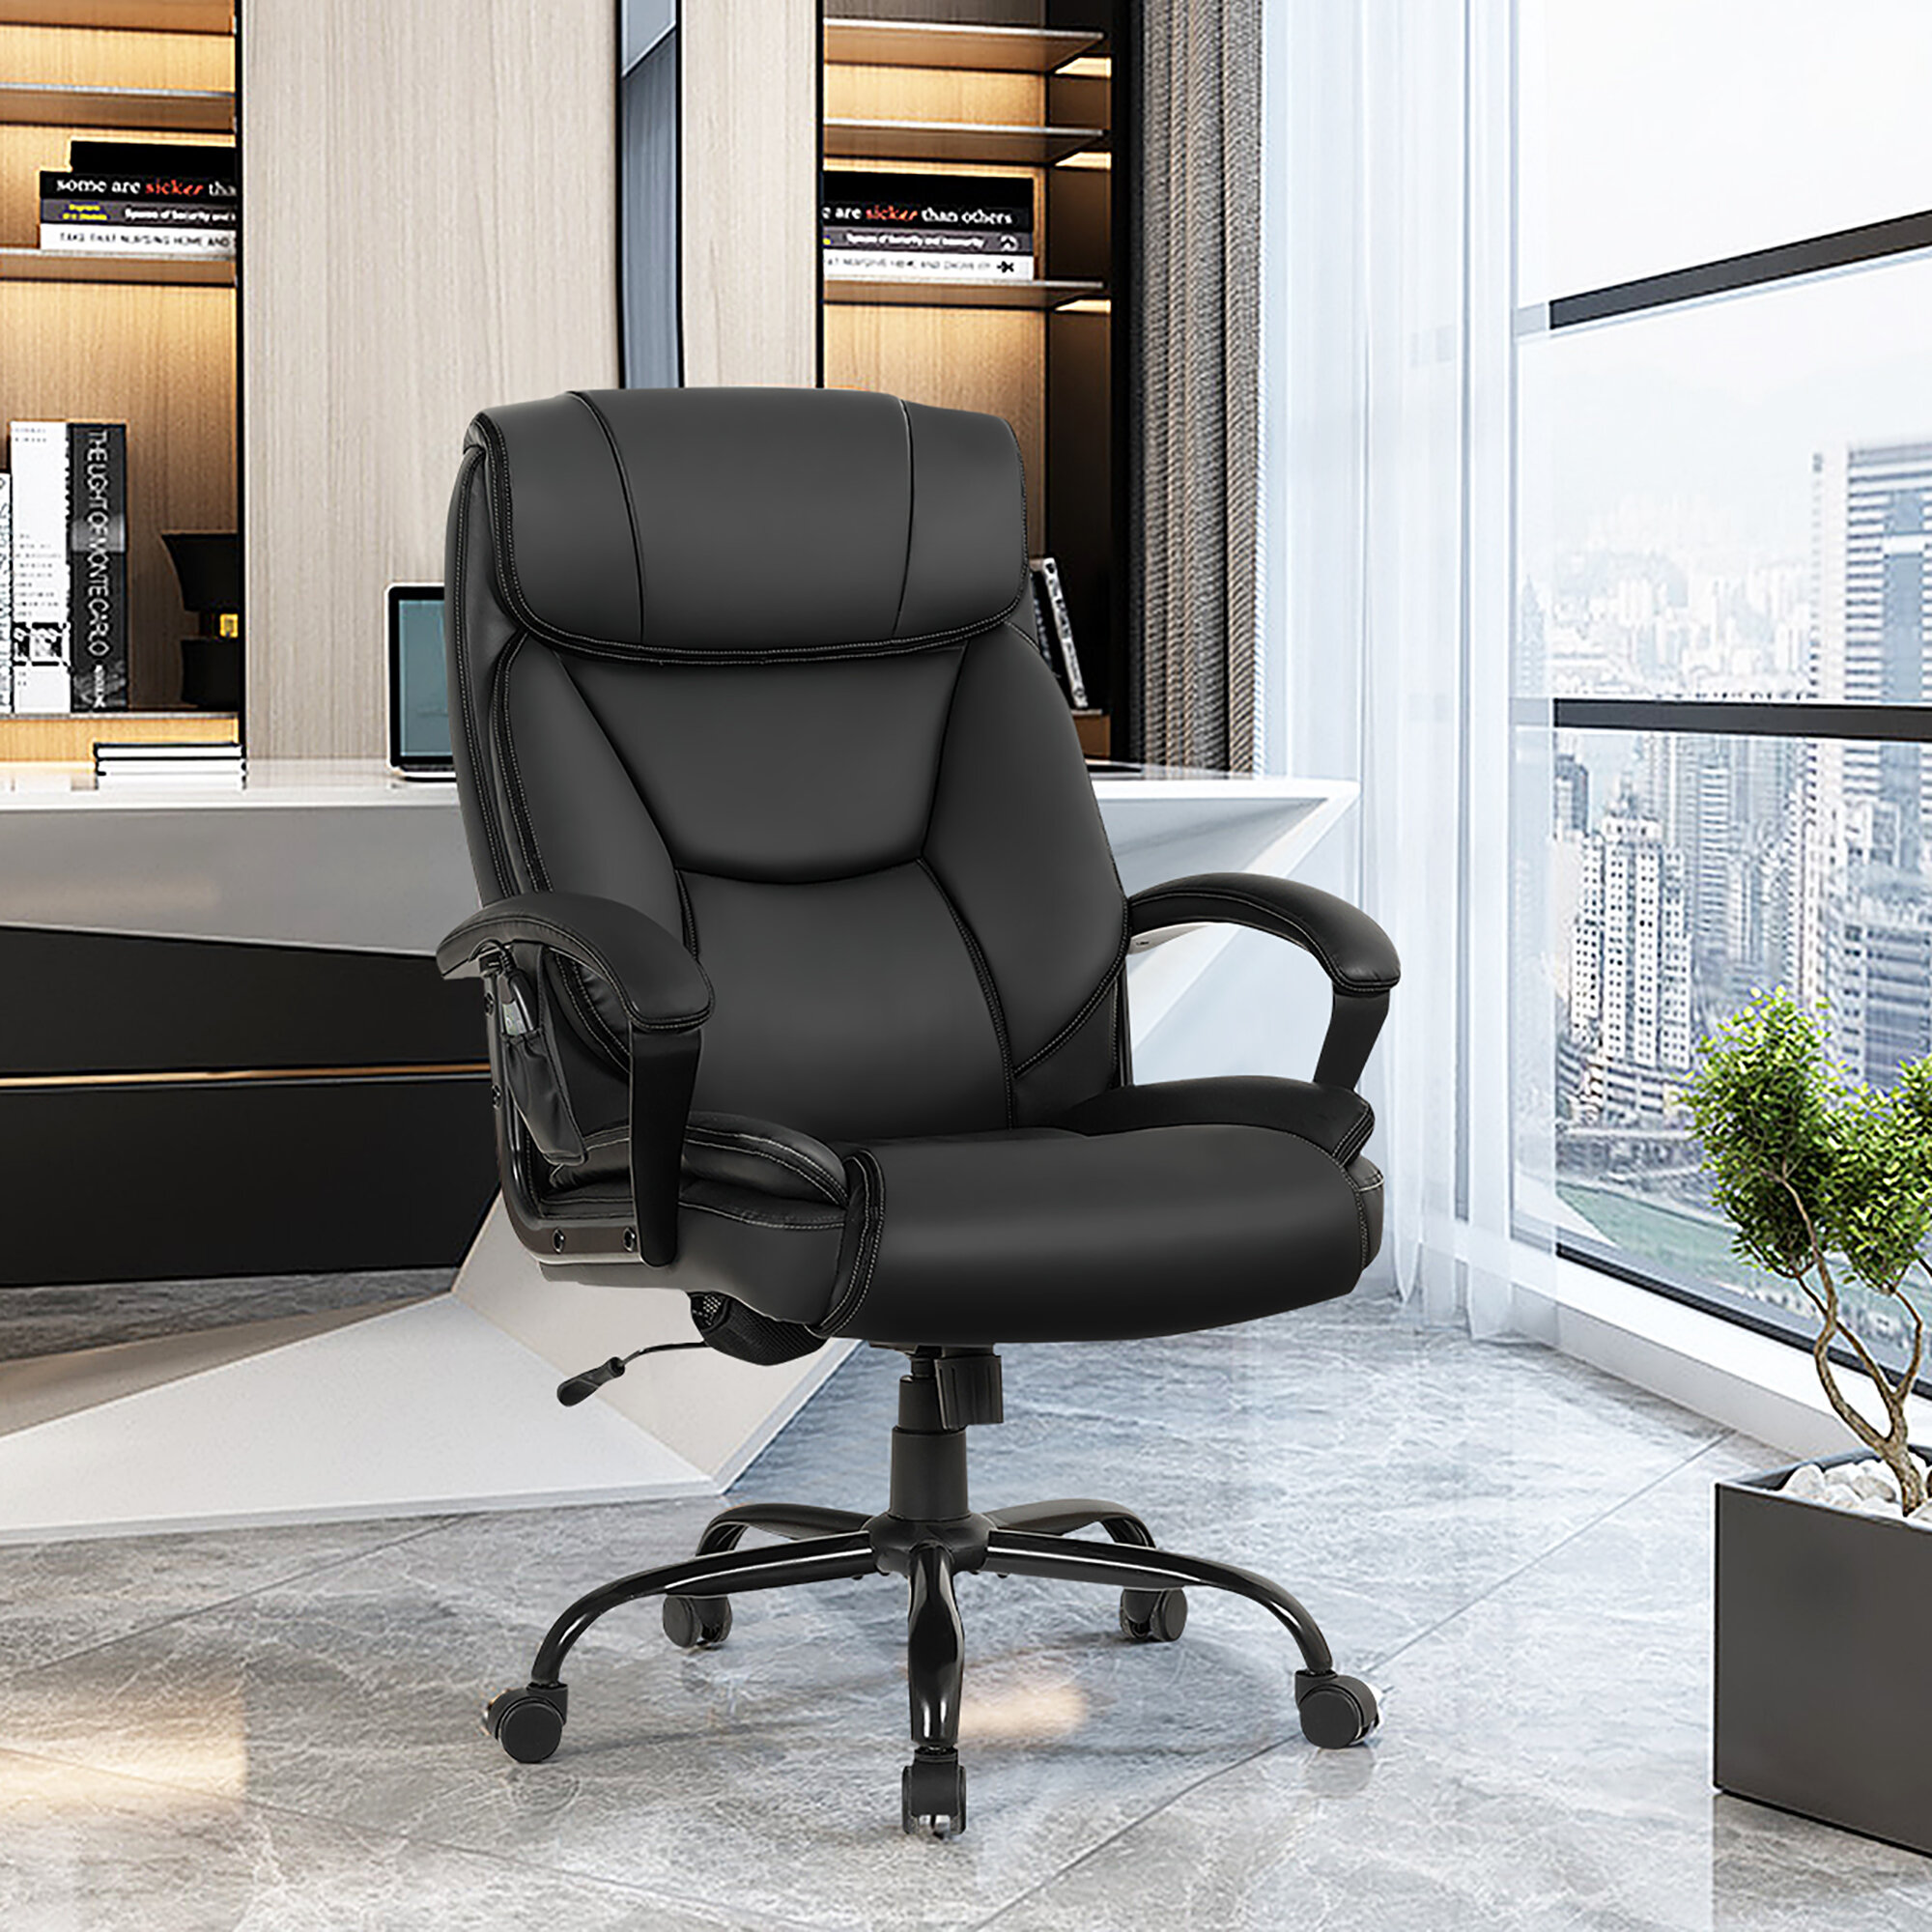 SOMEET Ergonomic Office Chair Home Office Desk Chair with Lumbar